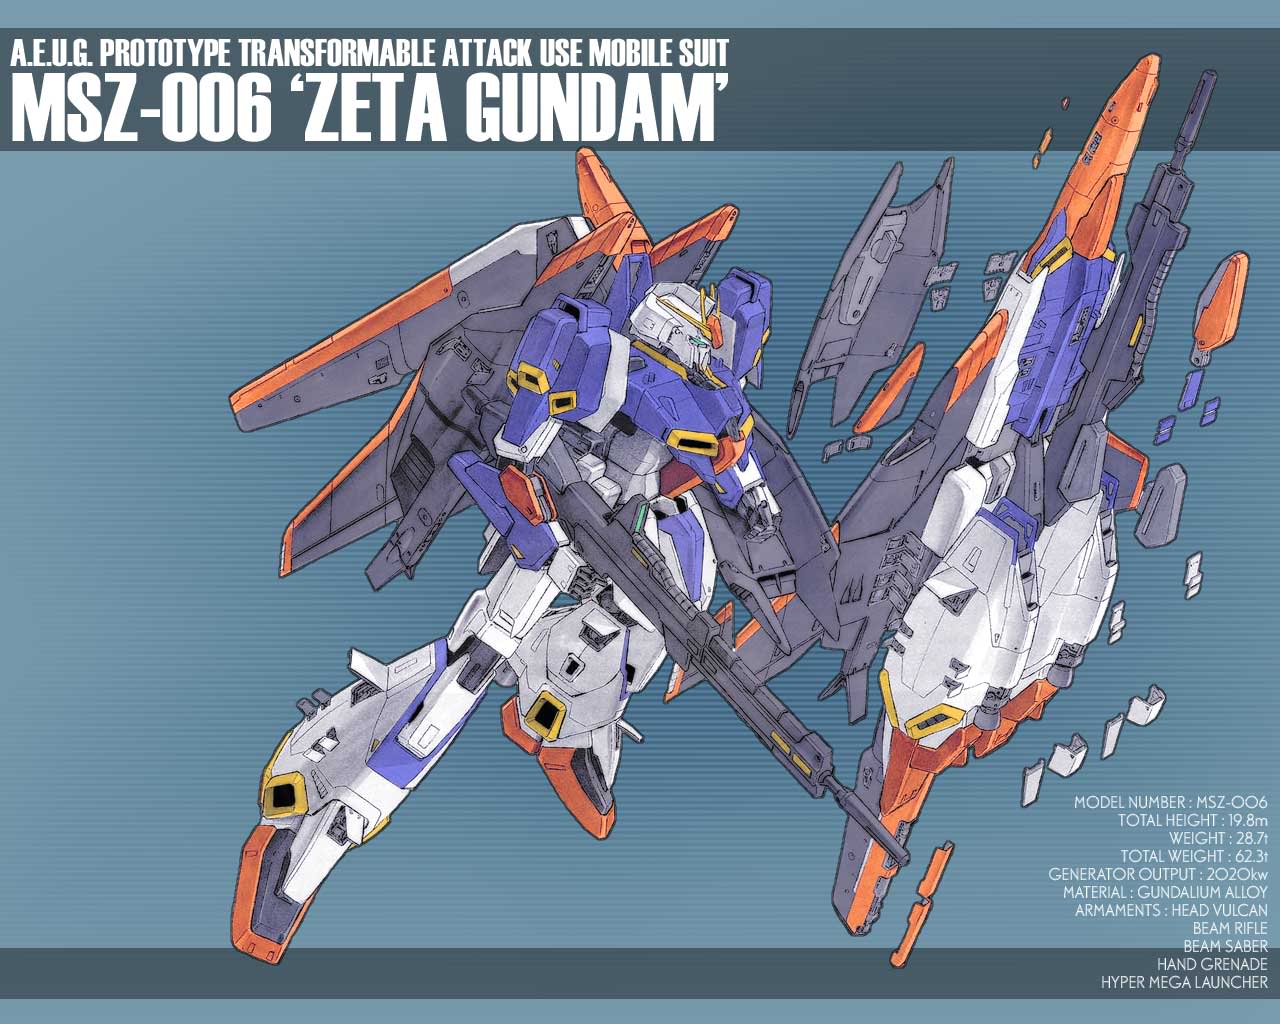 Free Download 1280x1024 For Your Desktop Mobile Tablet Explore 45 Zeta Gundam Wallpaper Unicorn Gundam Wallpaper Gundam Seed Destiny Wallpaper Gundam Wallpaper 19x1080